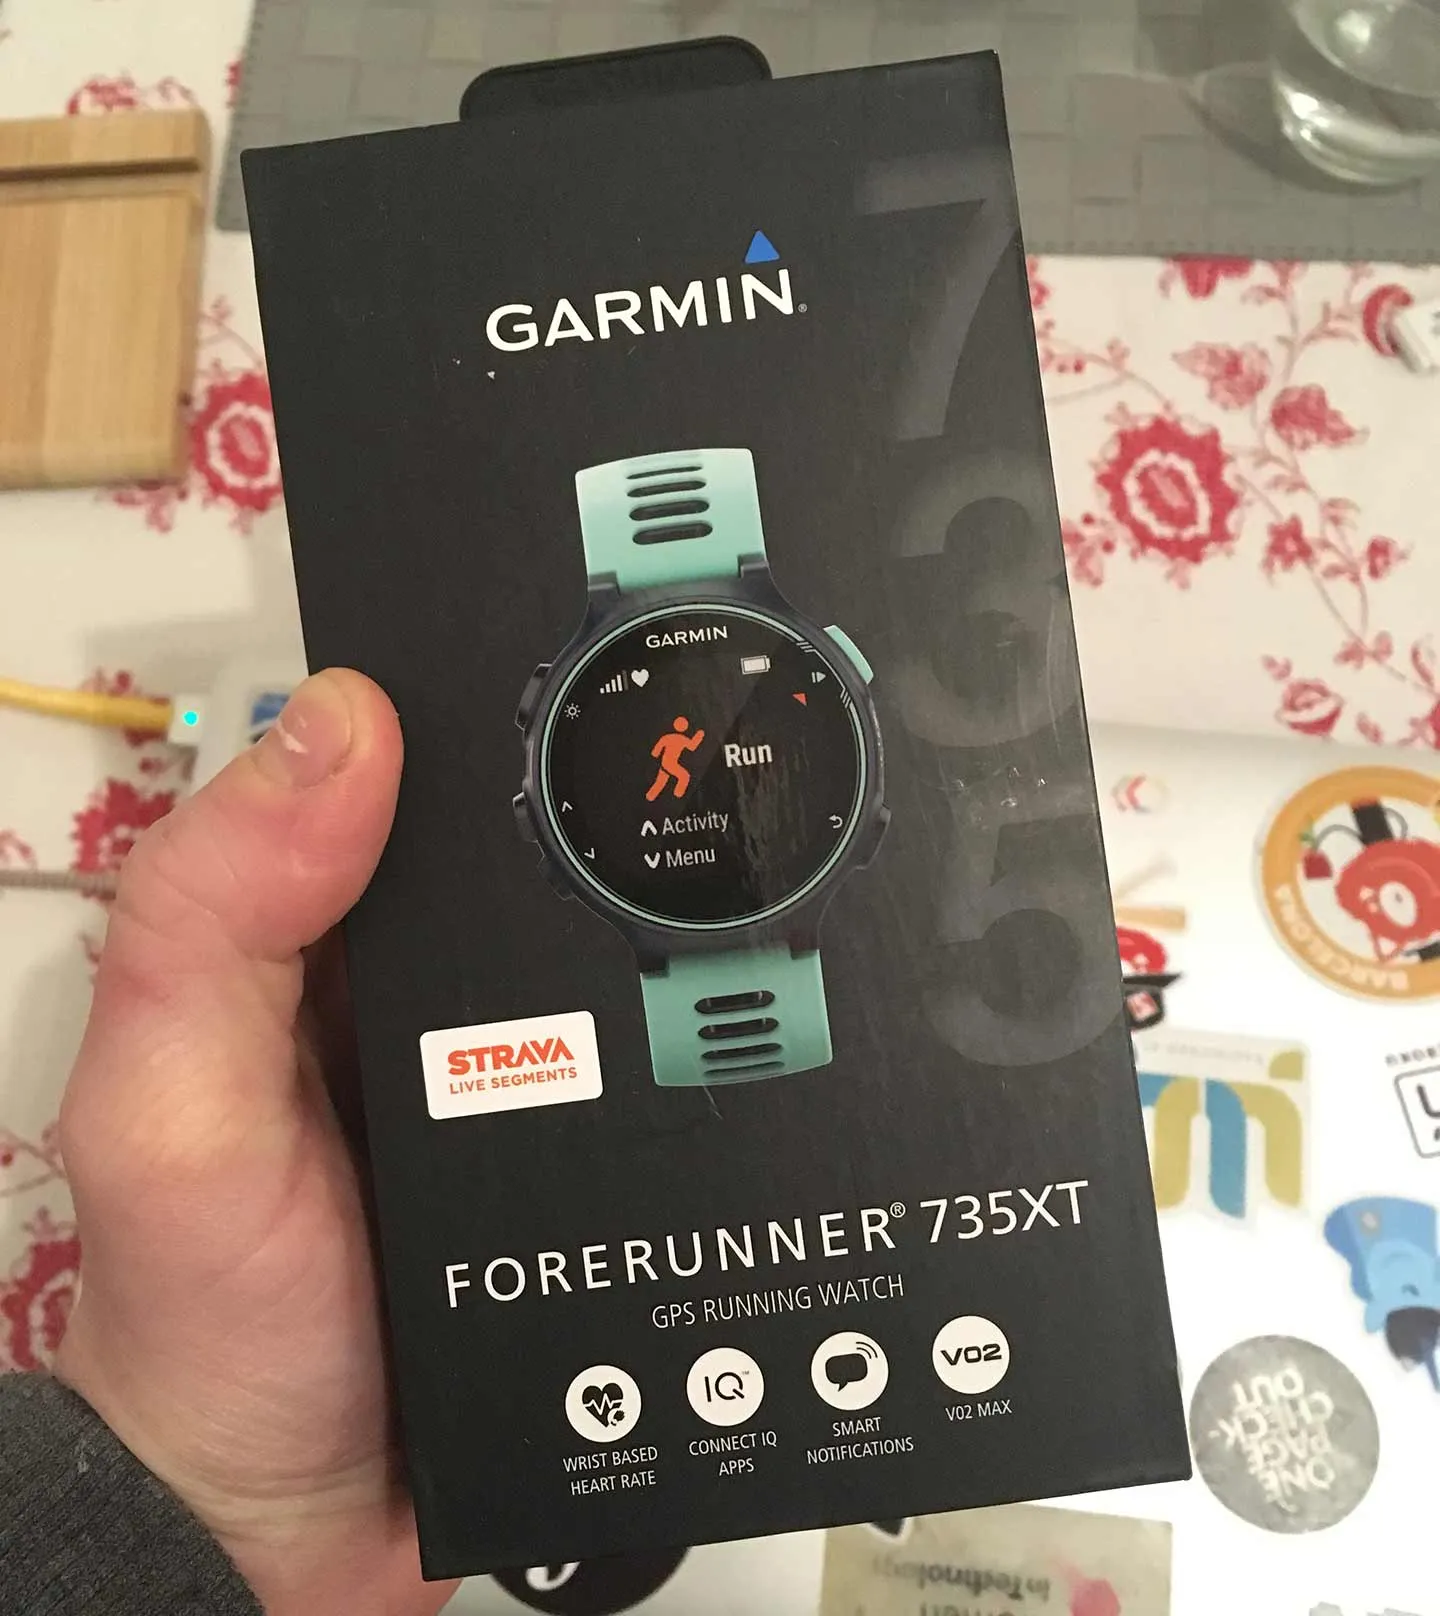 Unboxing my new watch - Garmin 735XT